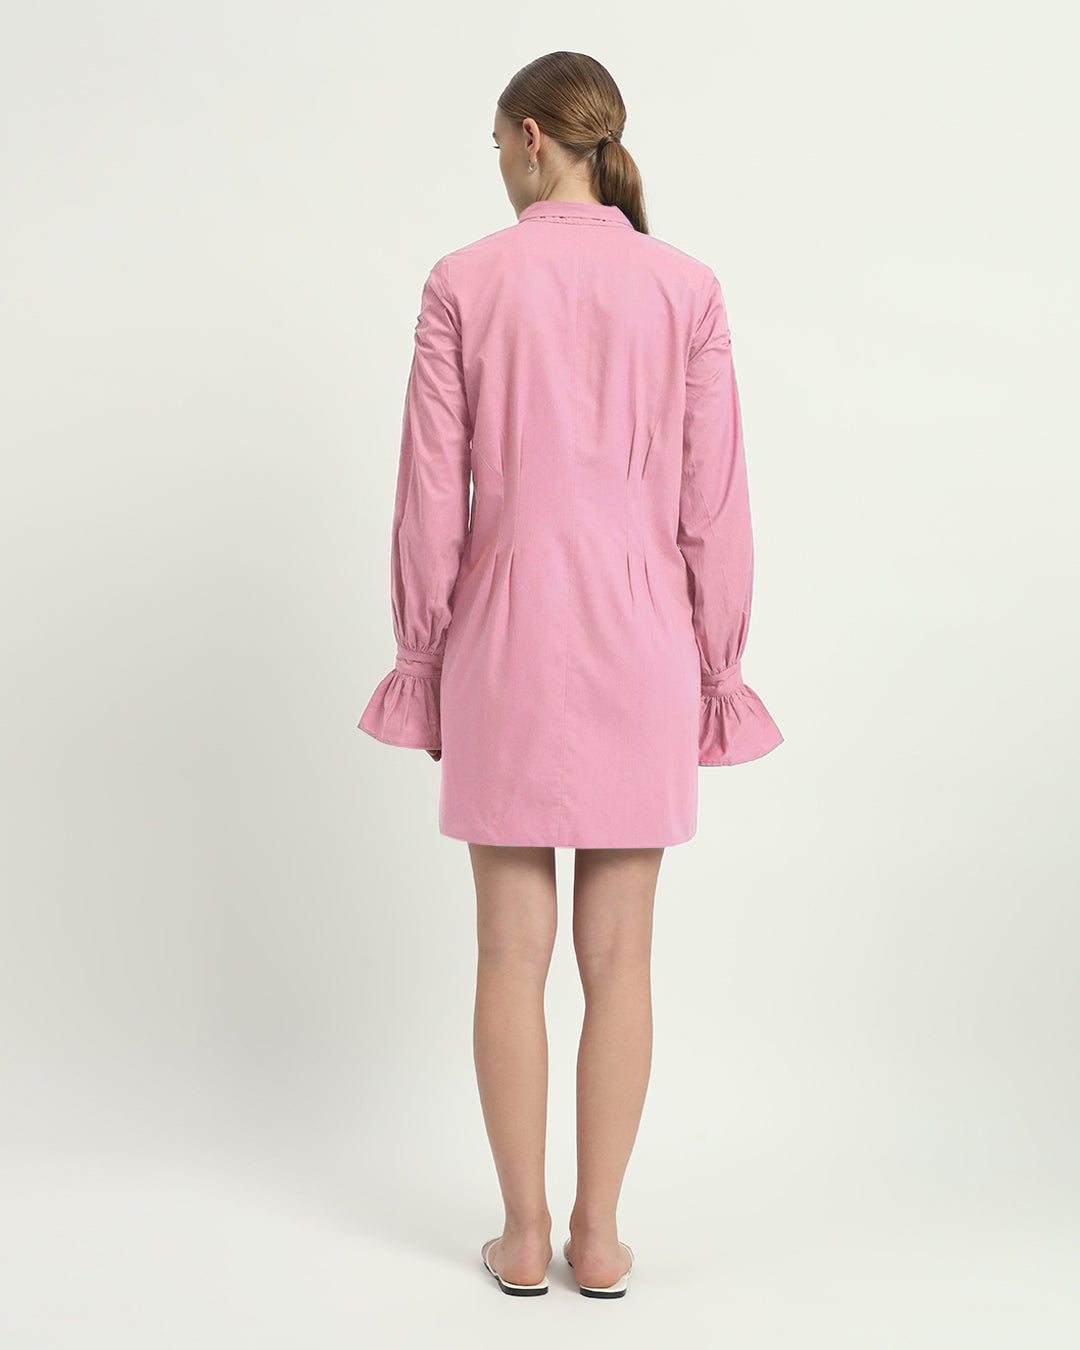 The Fondant Pink Sedona Cotton Dress